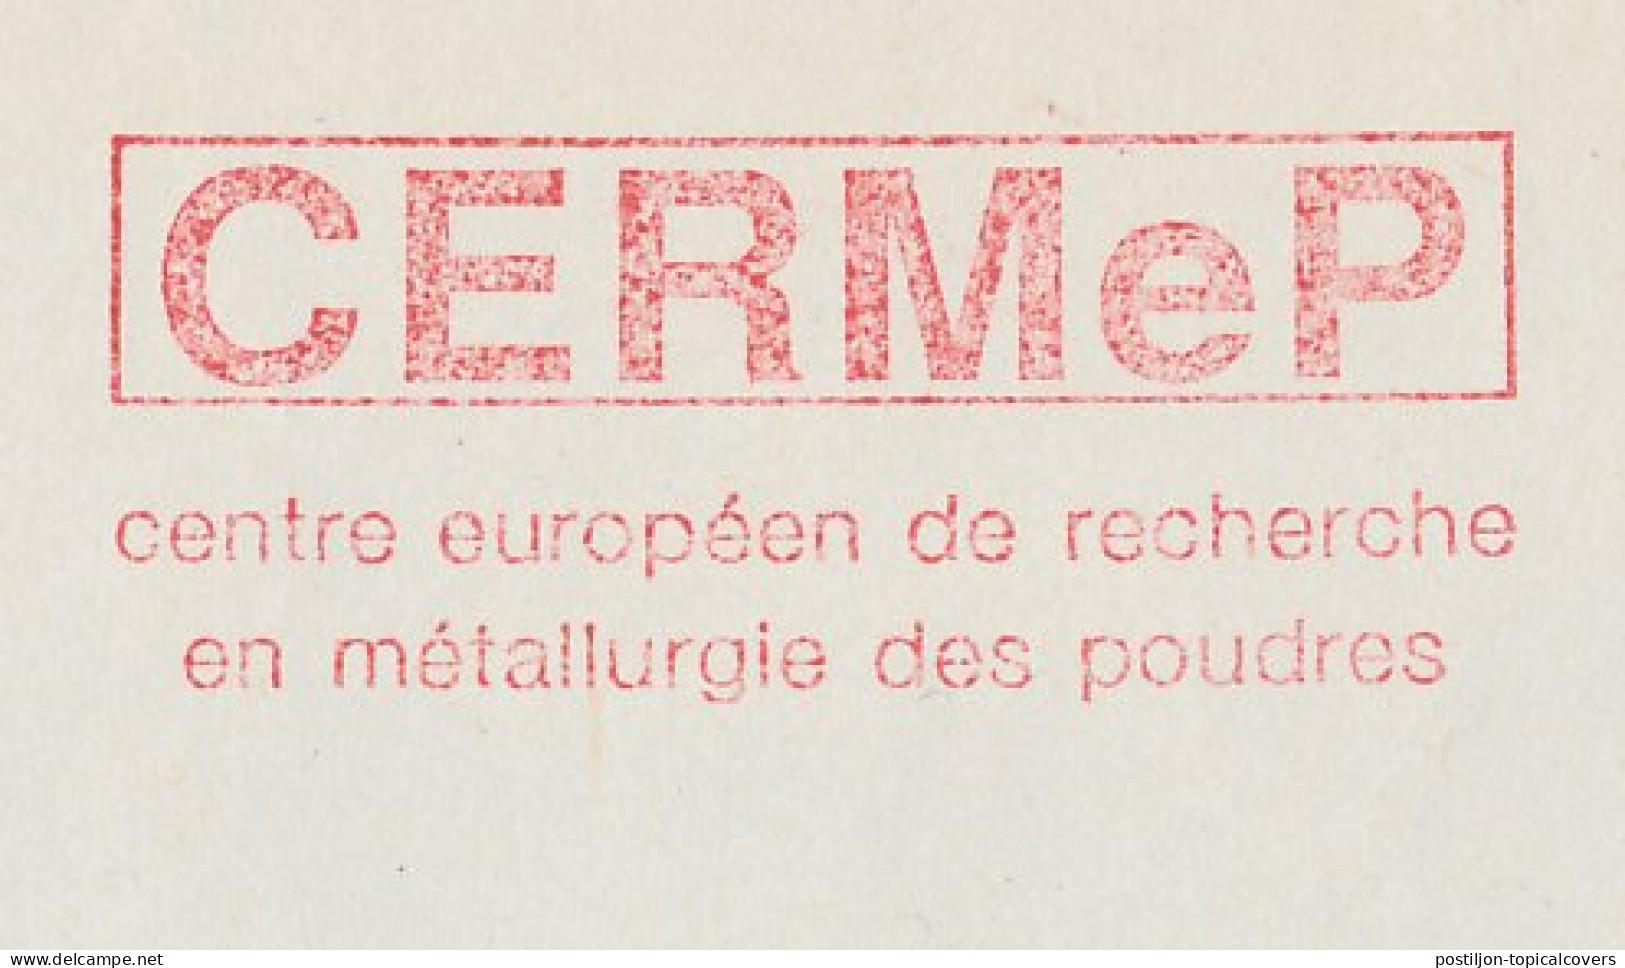 Meter Cover France 1991 CERMeP - European Research Center In Powder Metallurgy - Altri & Non Classificati